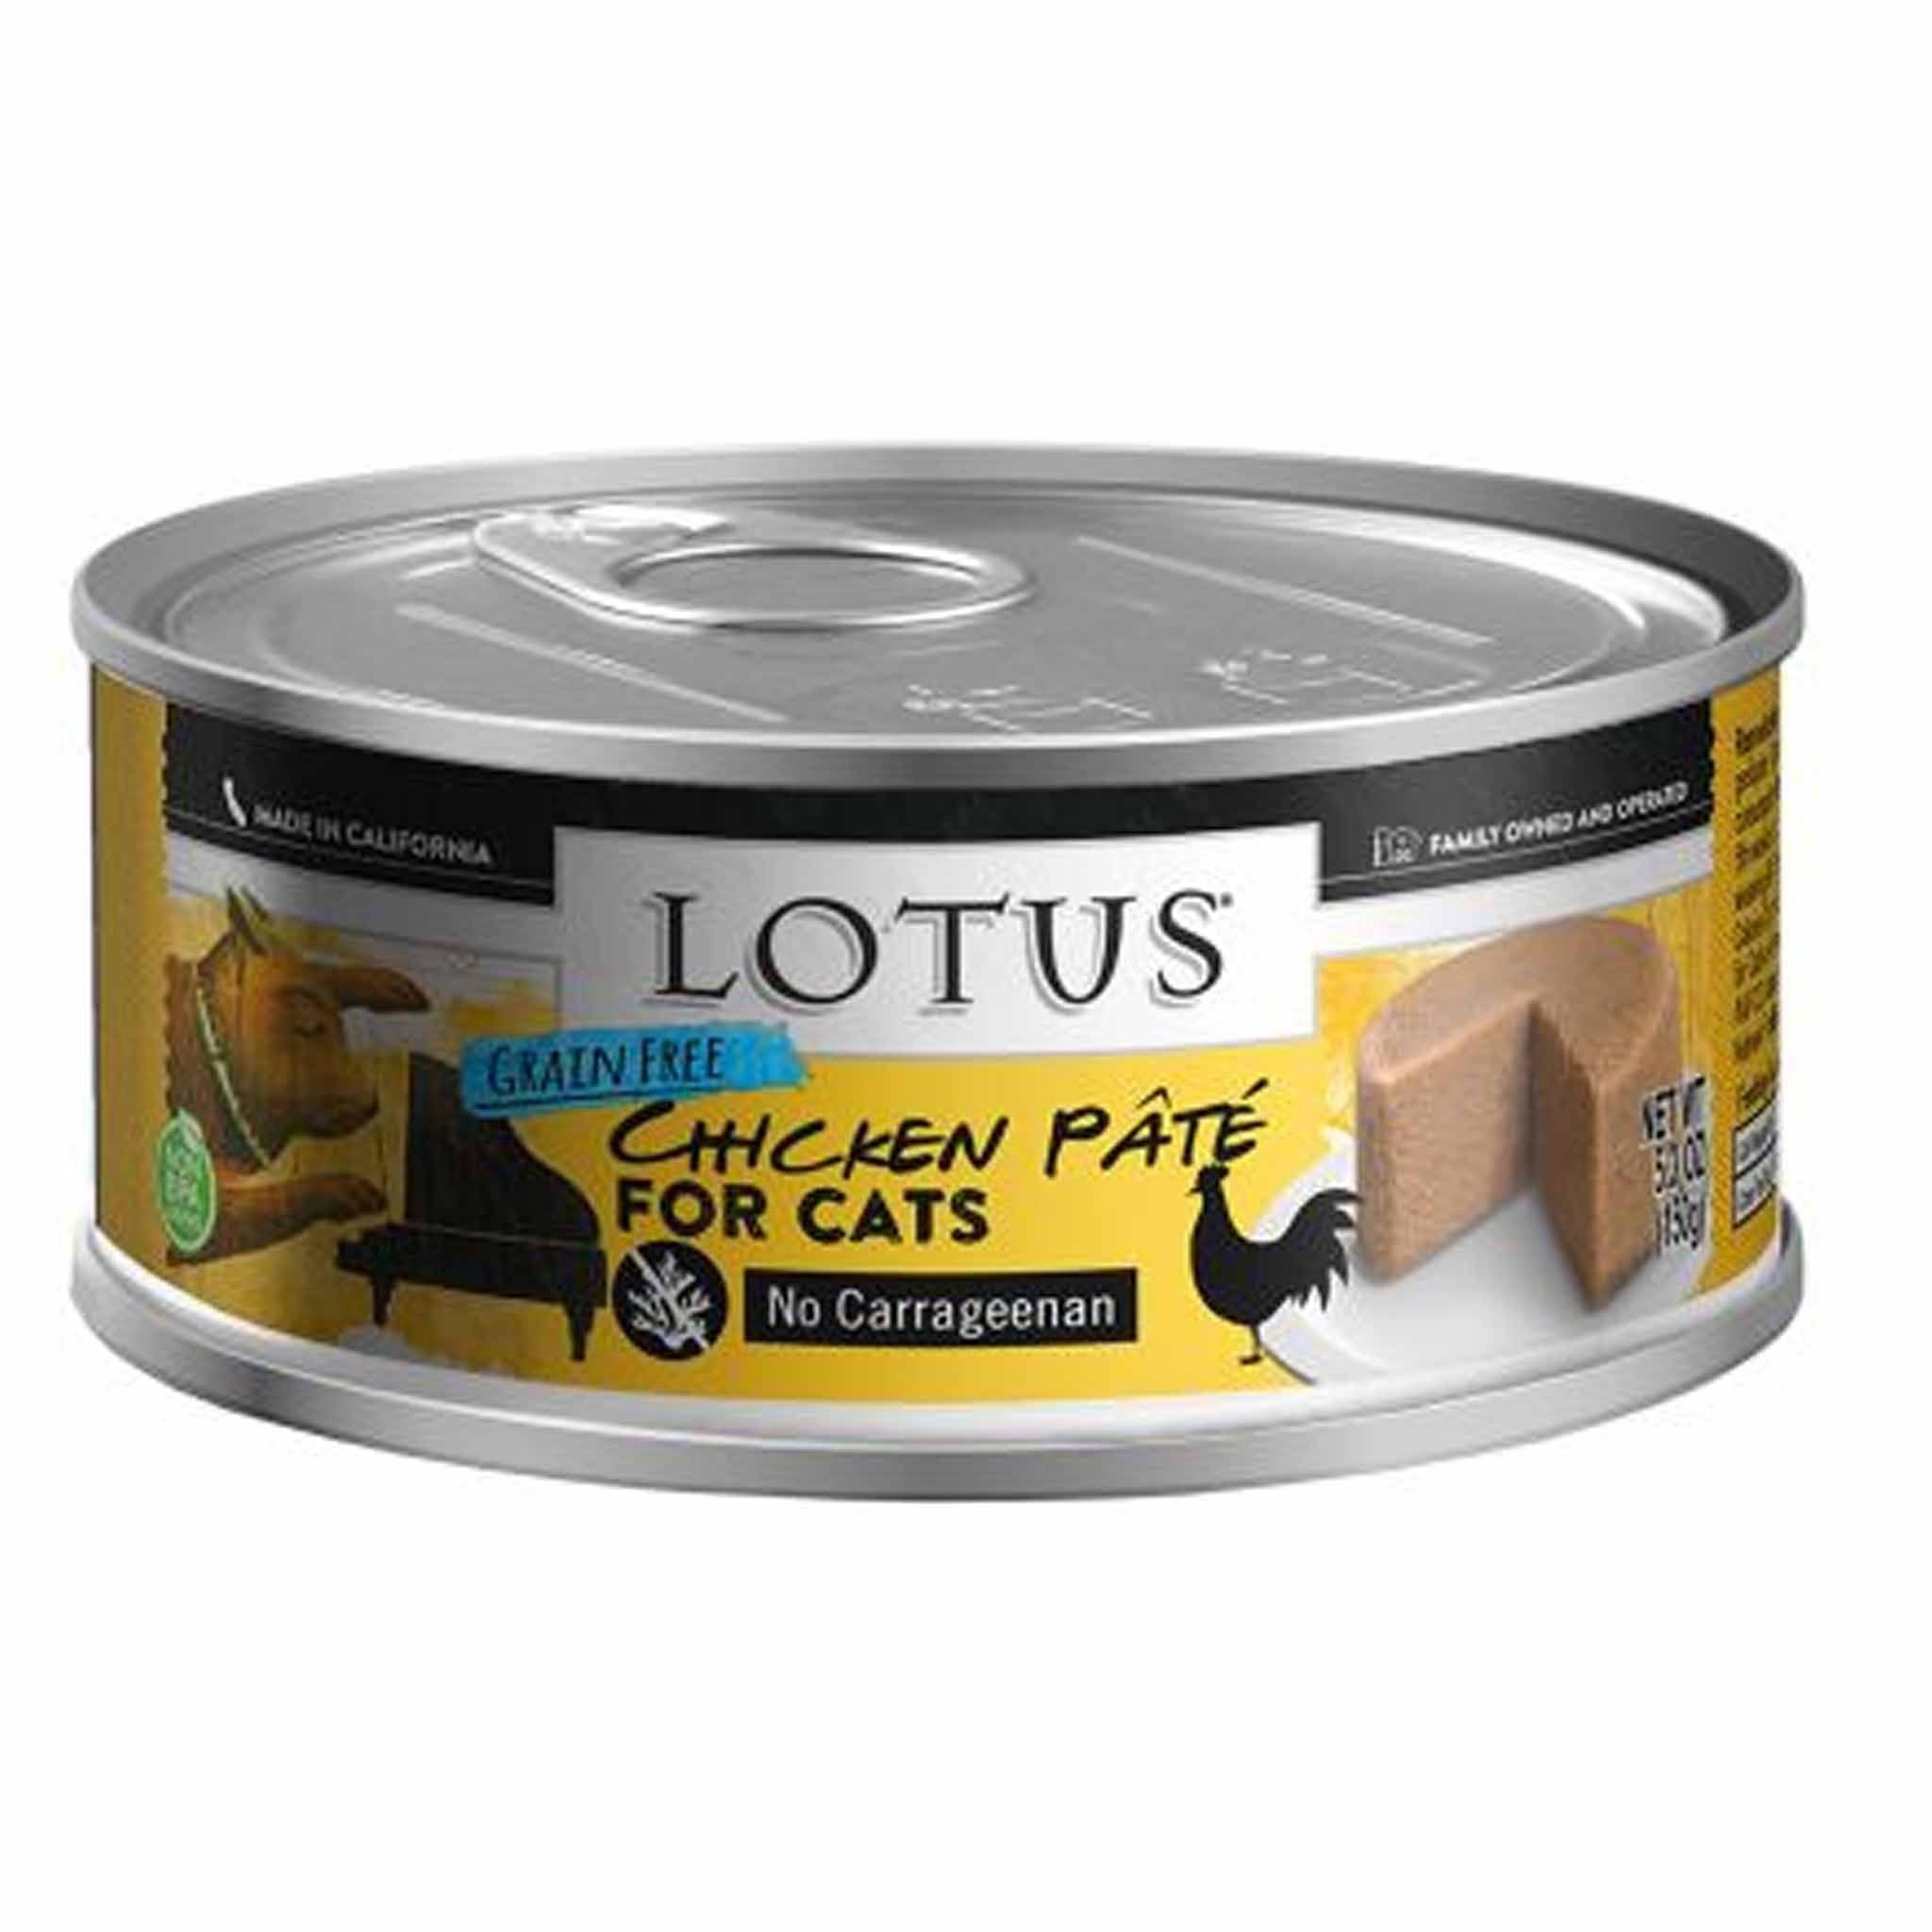 Lotus Chicken & Vegetable Pate Grain-Free Canned Cat Food, 5.5-oz